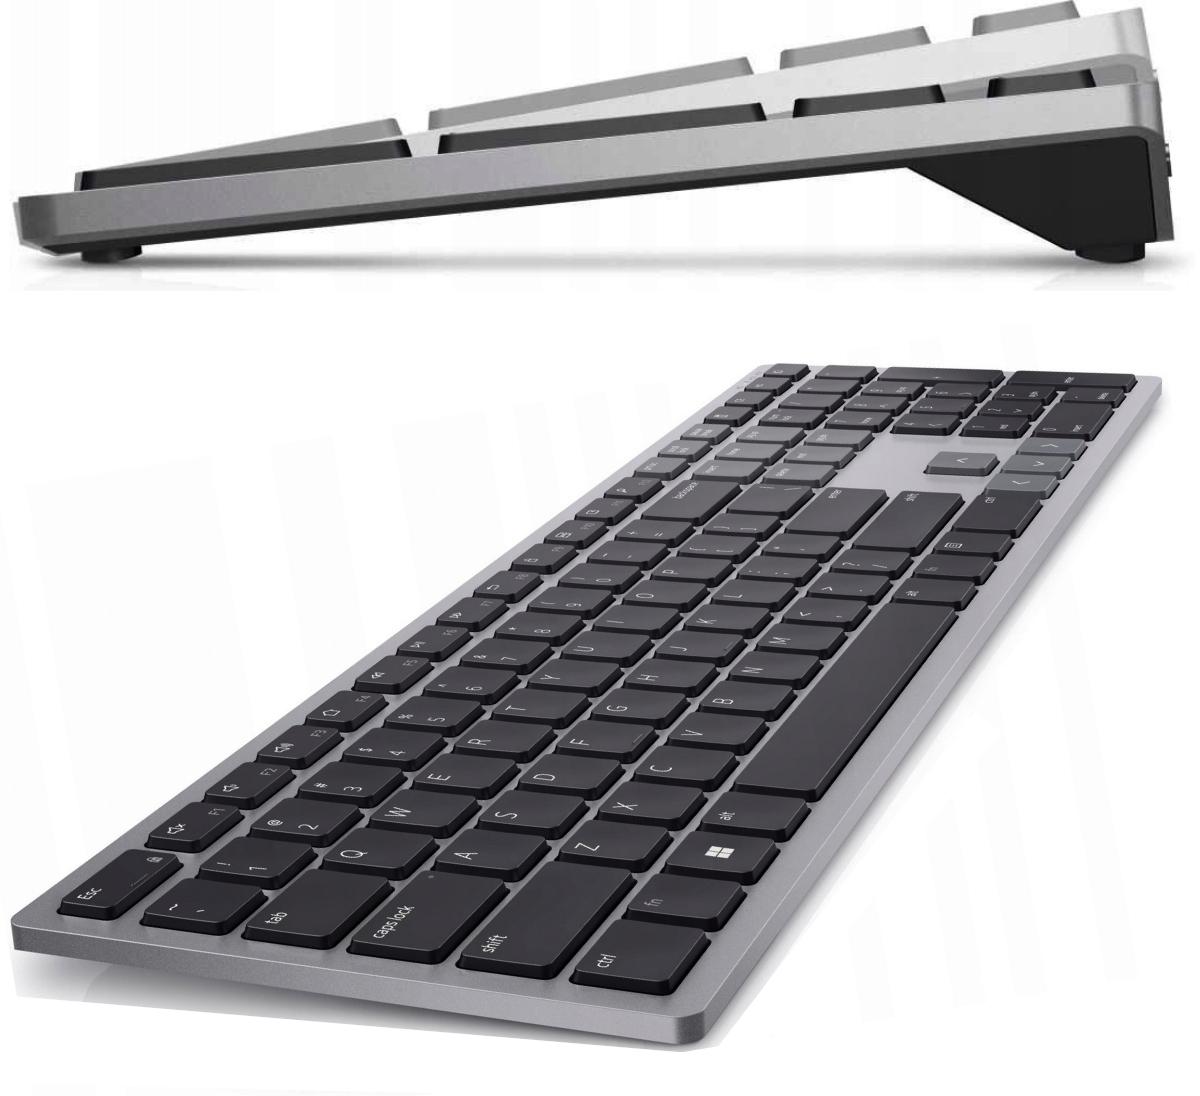 Bezprzewodowa klawiatura Dell Dell KB700 Multi-Device Wireless Keyboard - najważniejsze cechy: